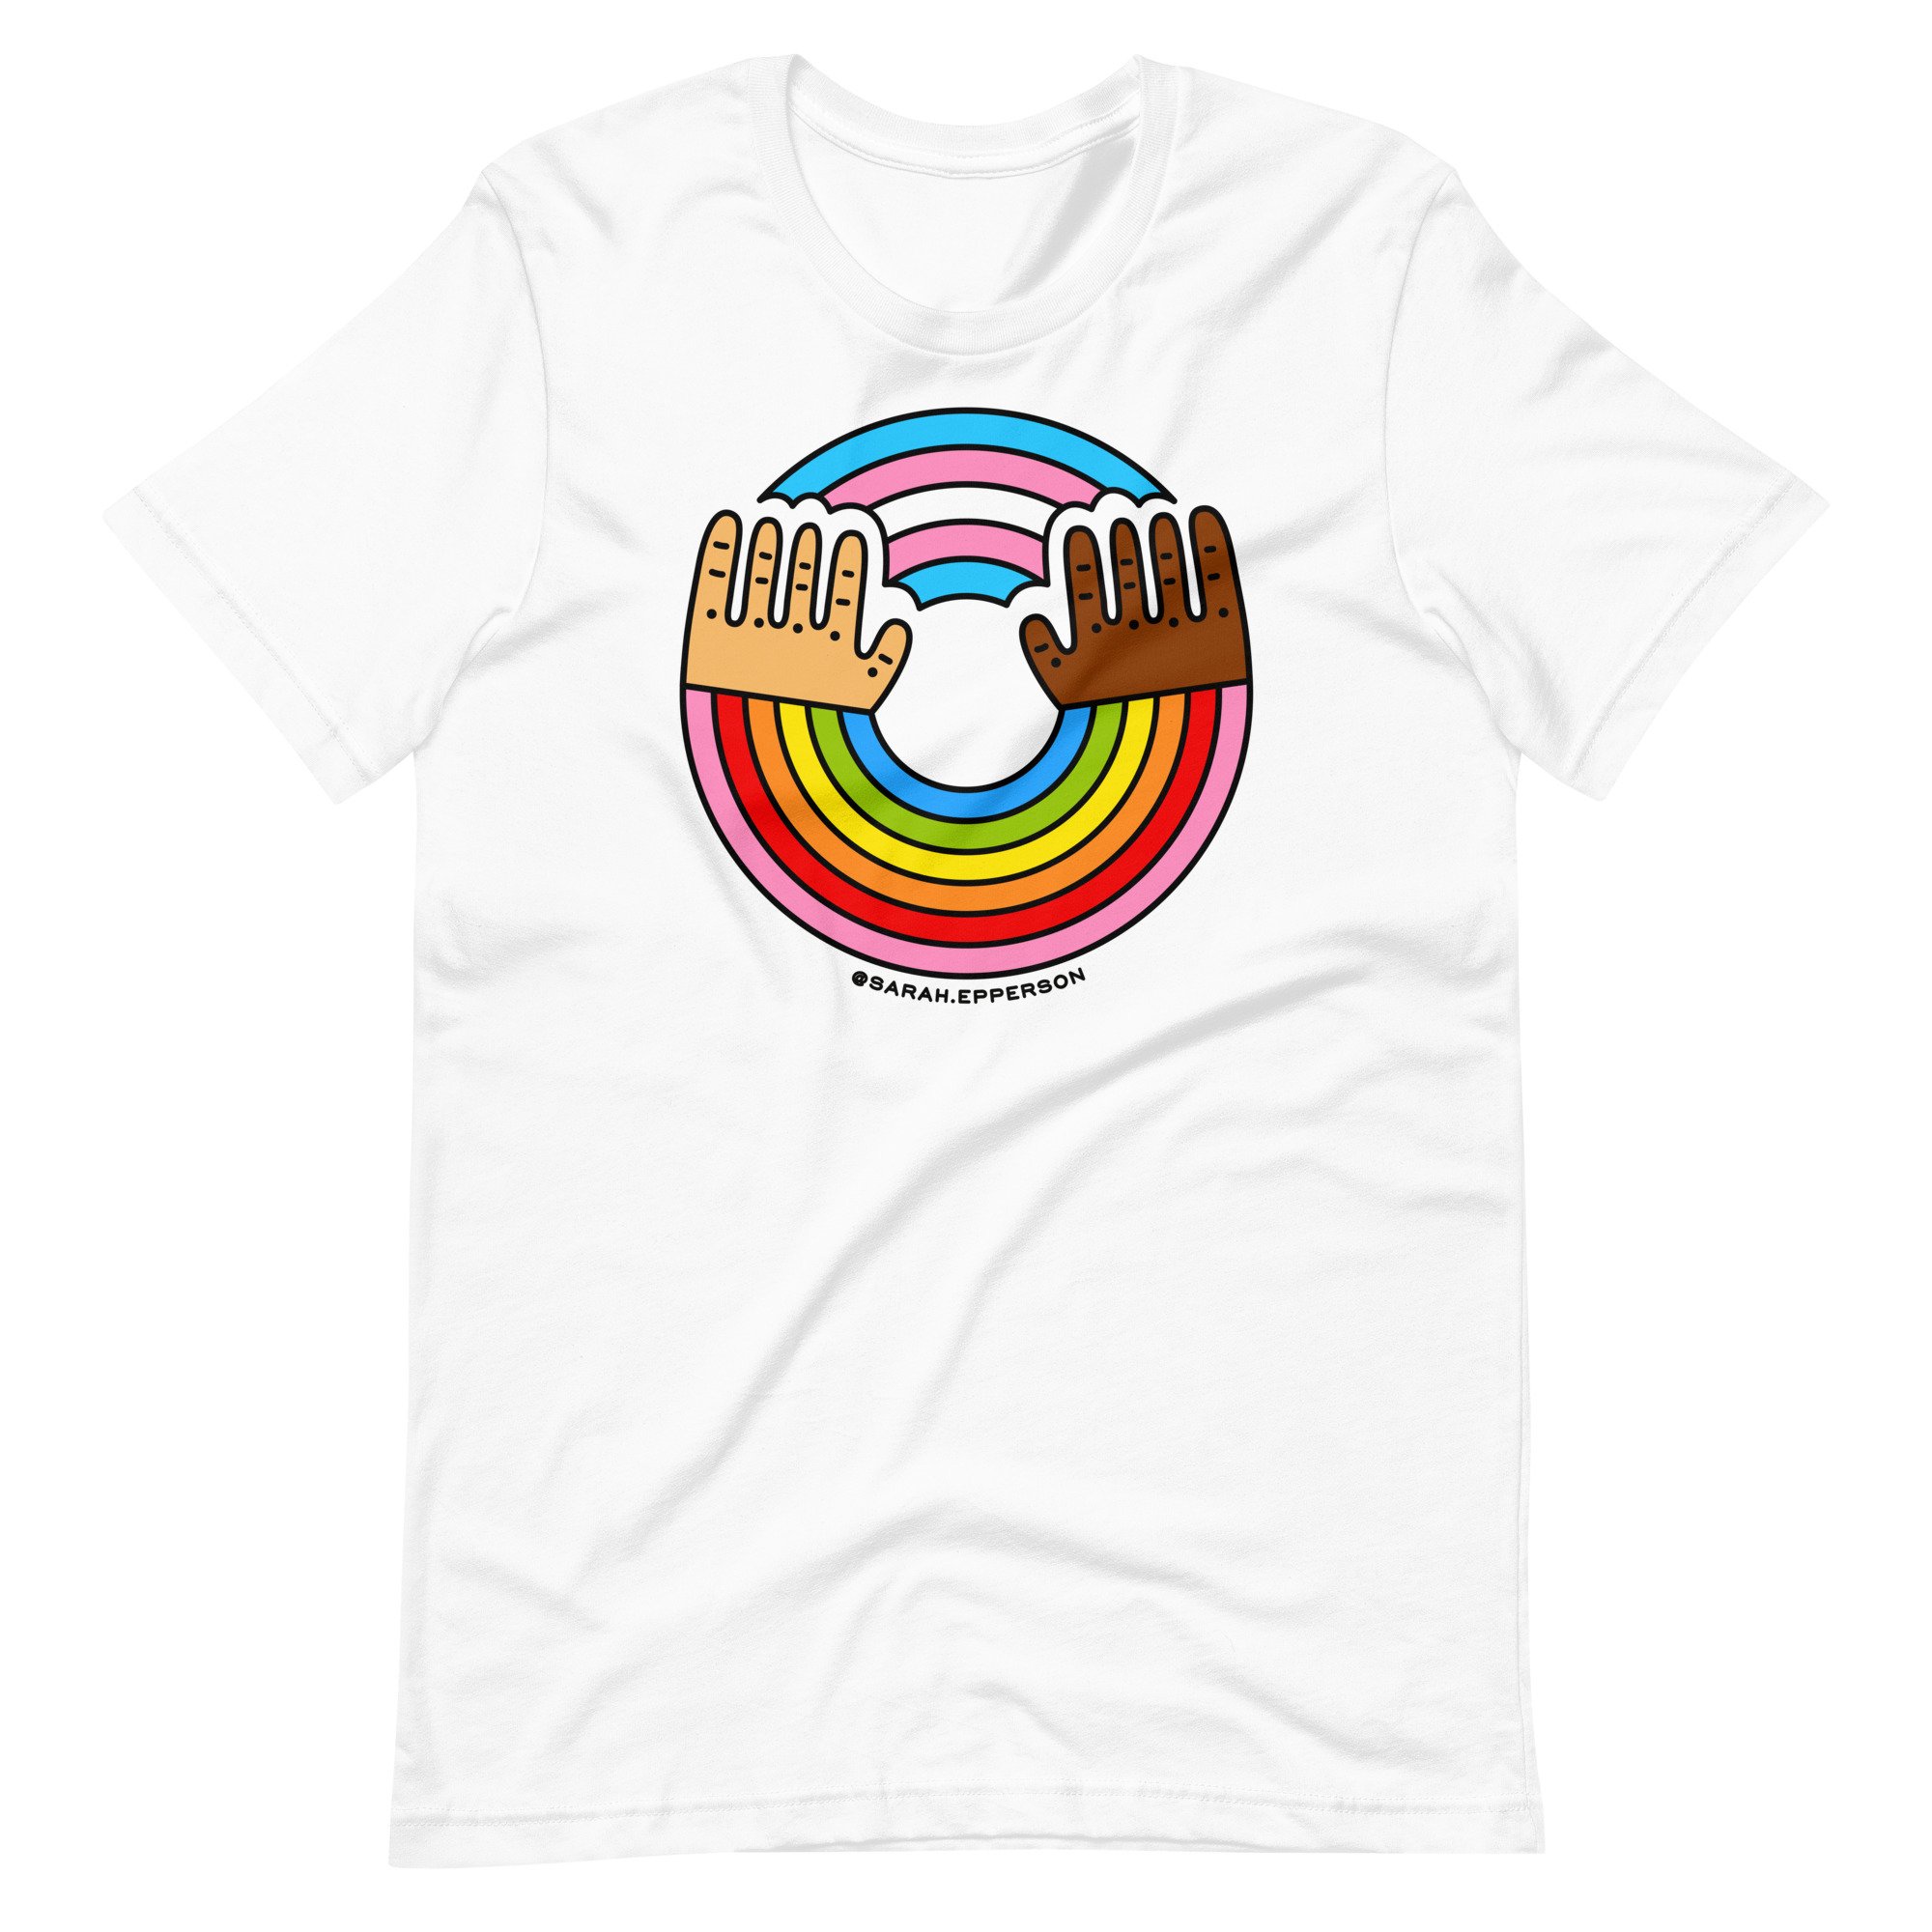 Rainbow boobs T-shirt